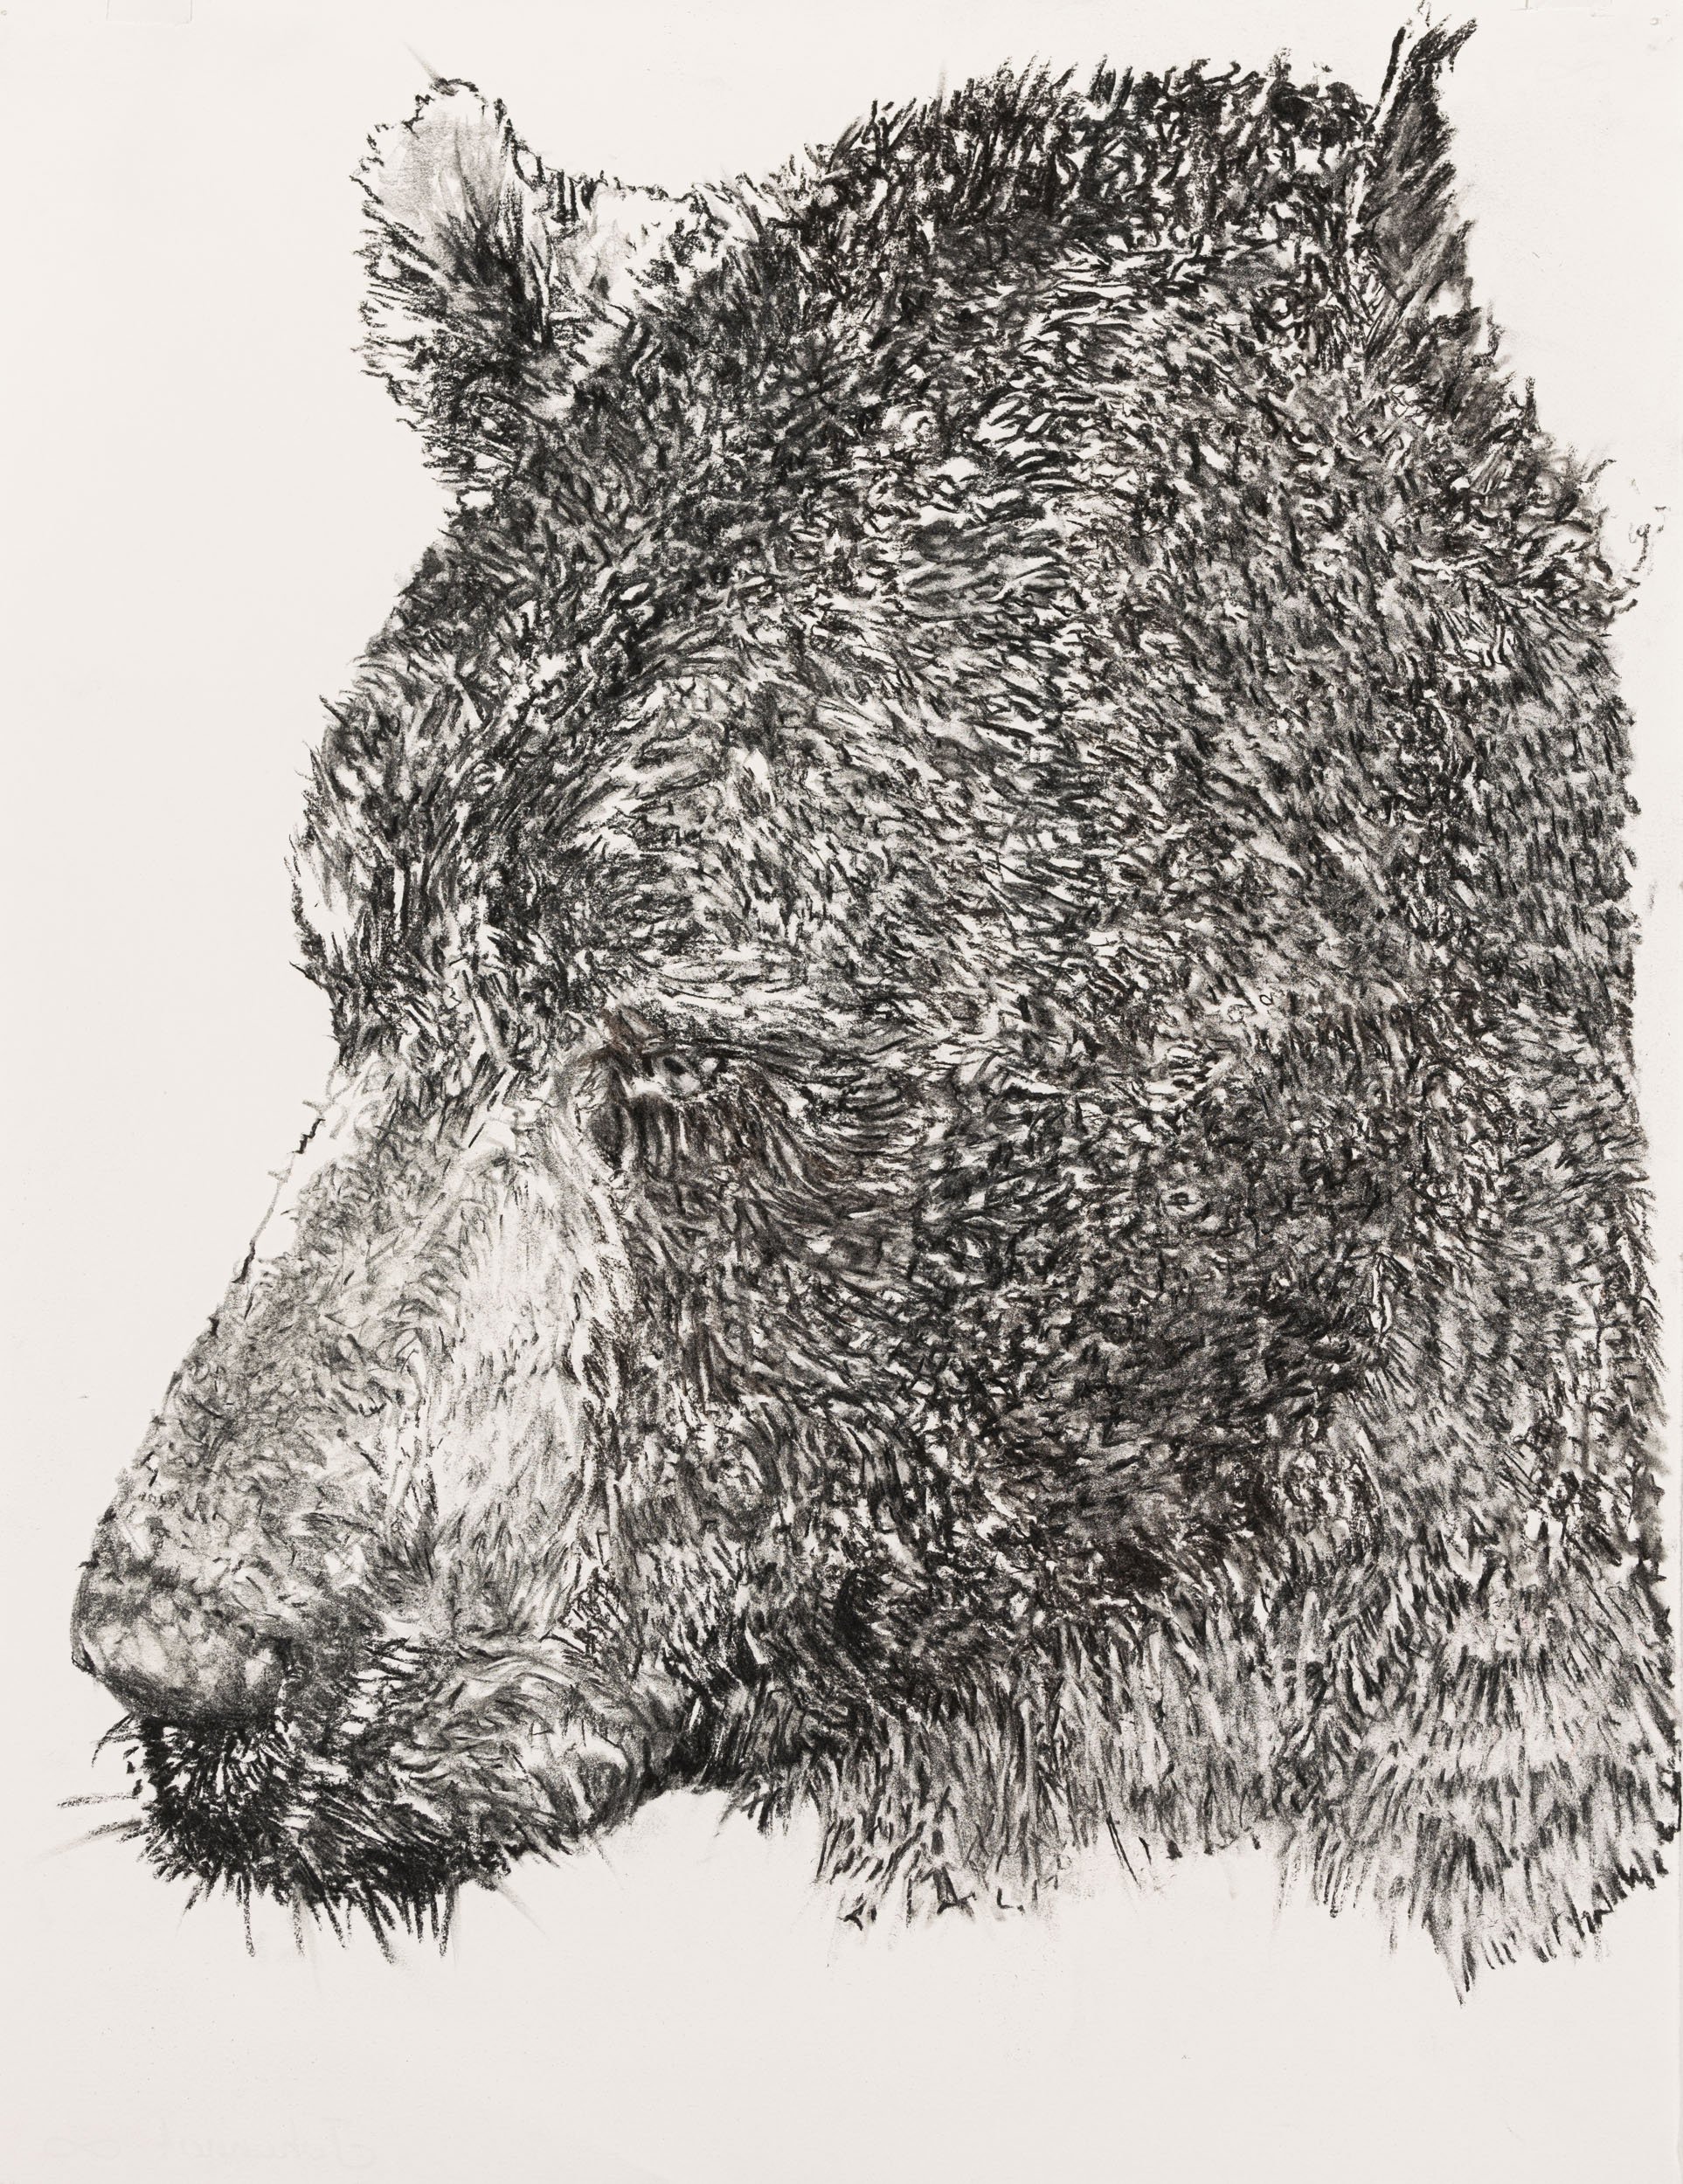   Sad Bear,  2022                                                           graphite on paper                                                                  26 x 19.5" paper                                                                28.5 x 22.5